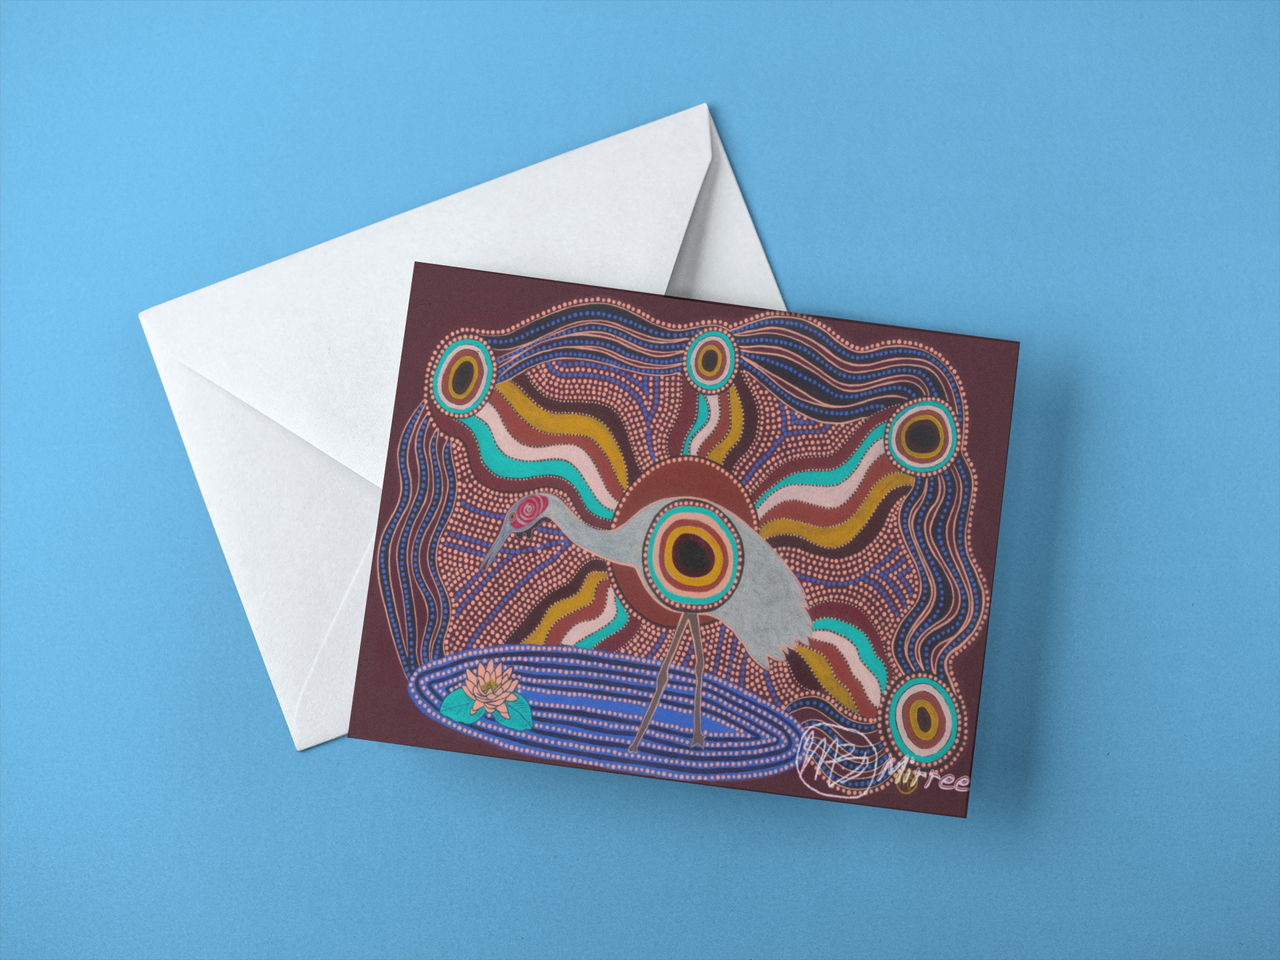 Brolga Aboriginal Art Animal Dreaming A6 Greeting Card Single by Mirree